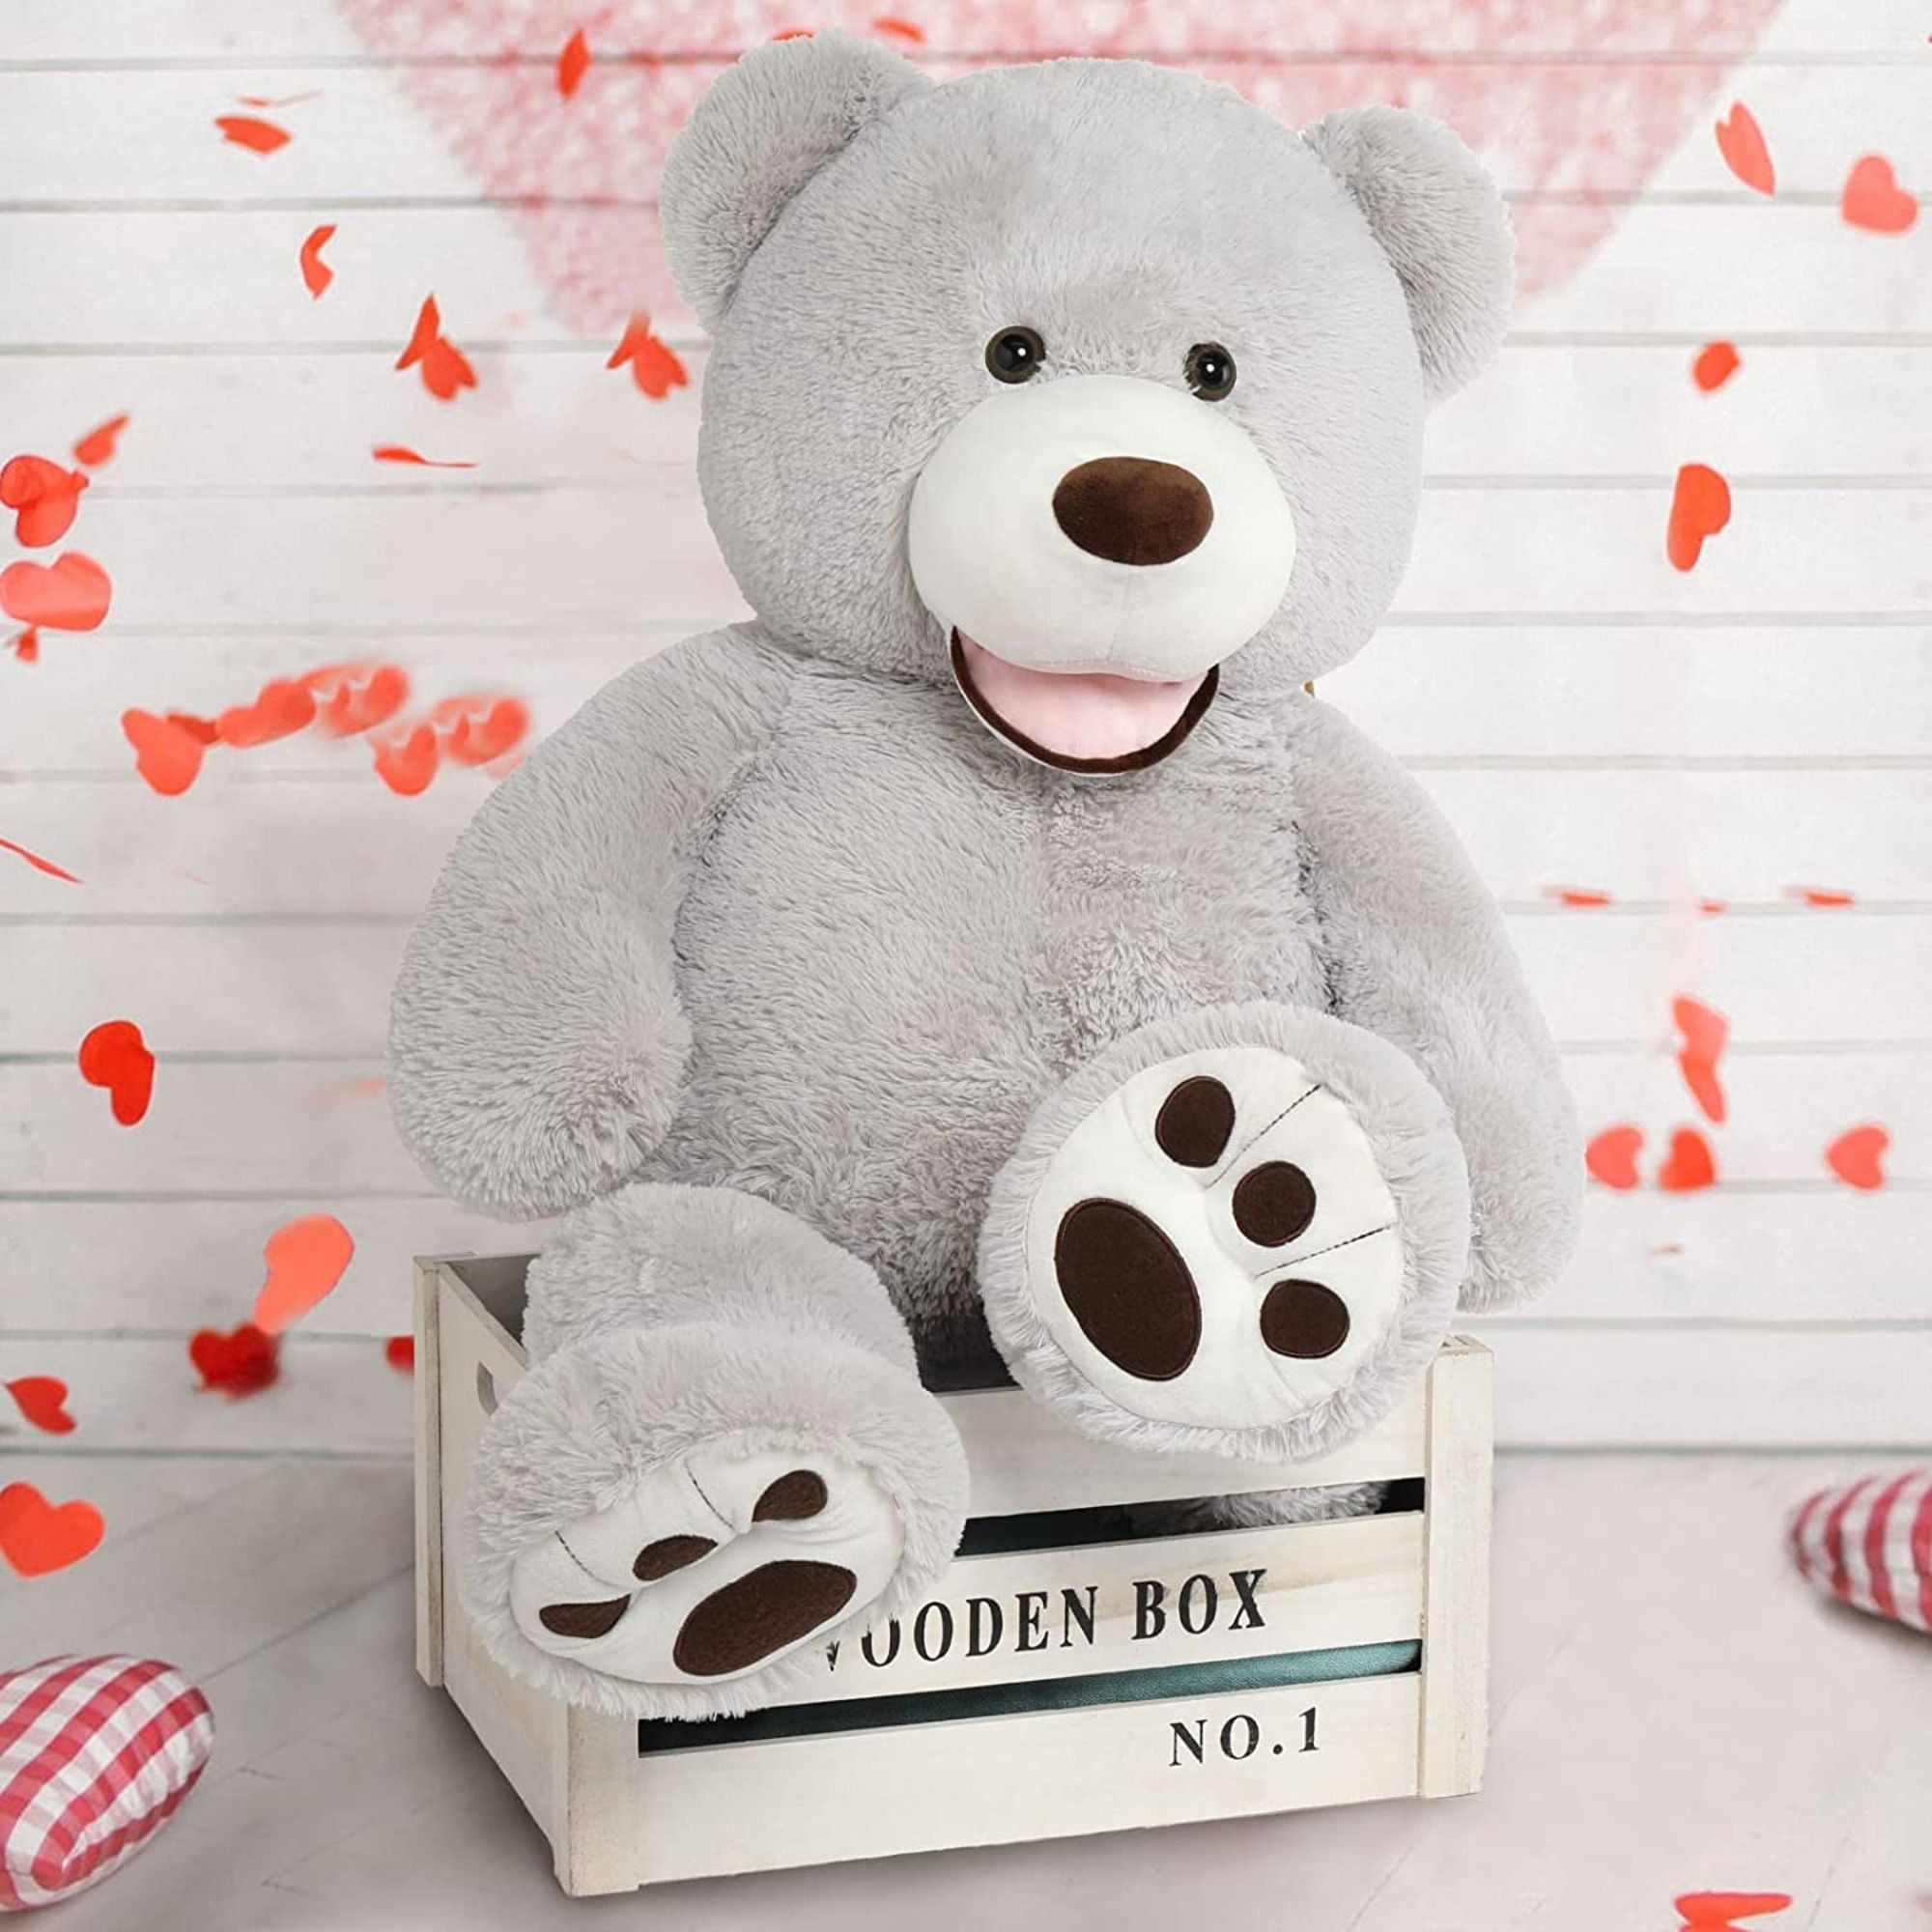 MorisMos Stuffed Animal Giant Teddy Bear with Footprints 51 Plush